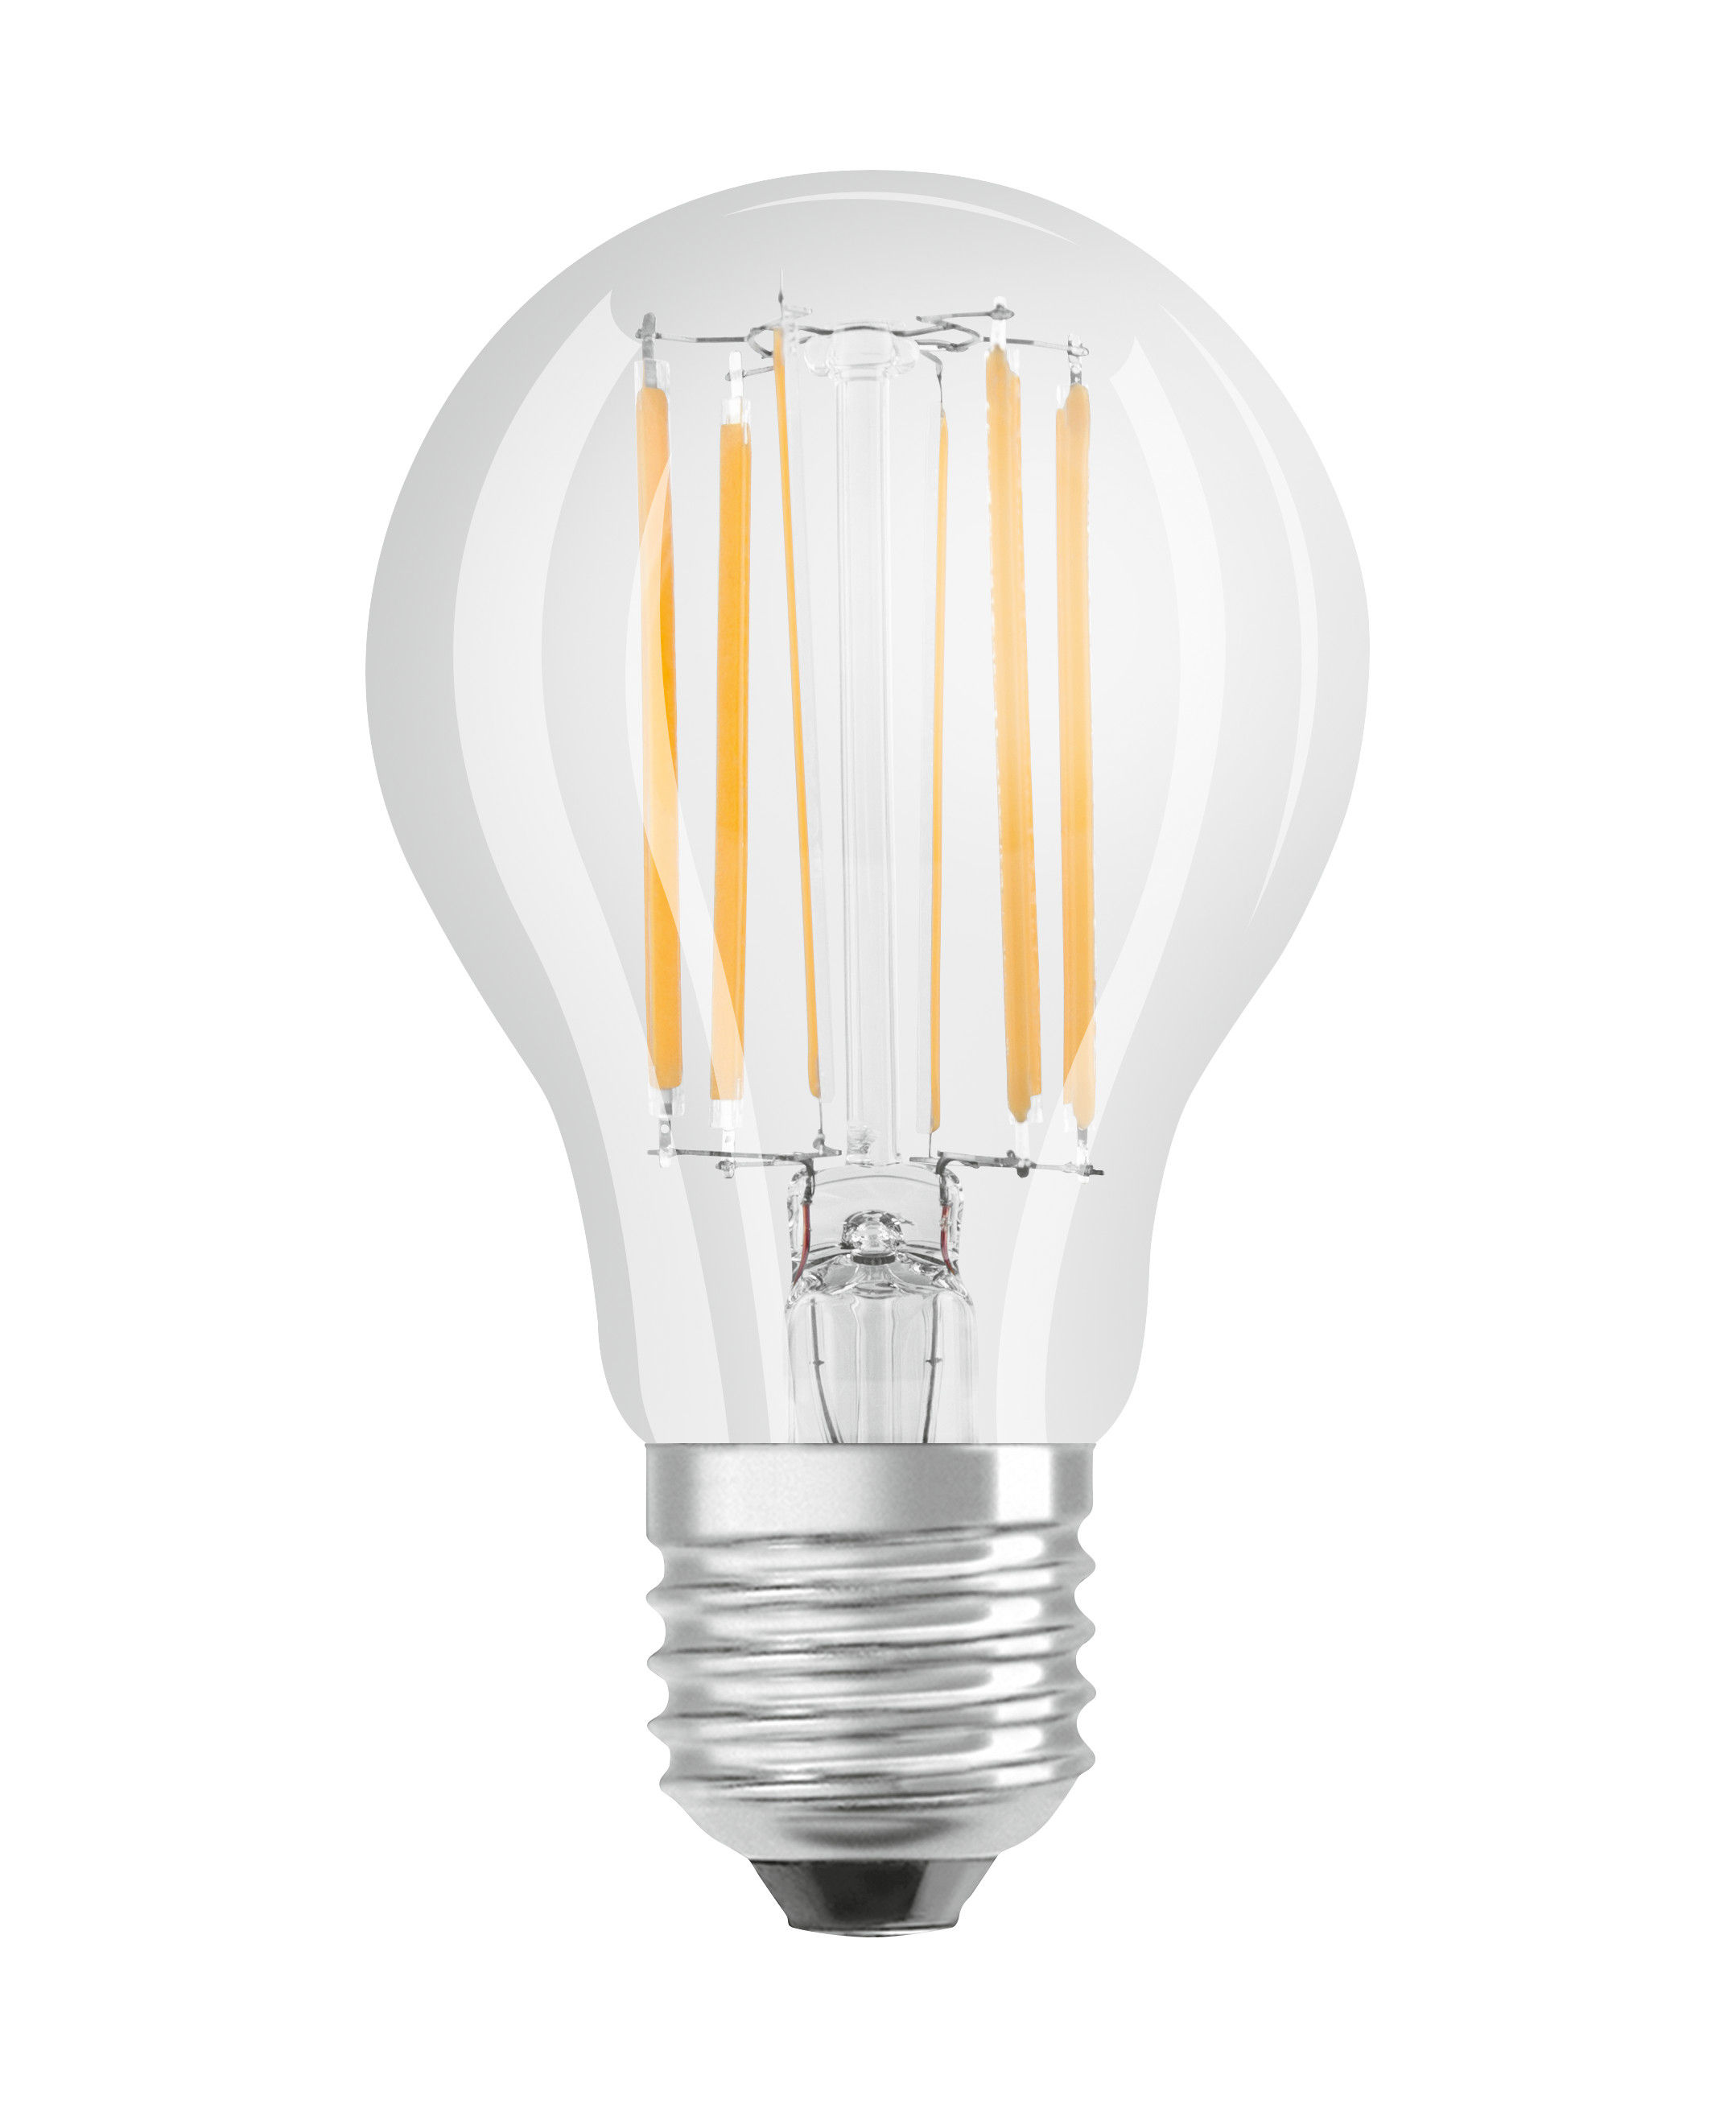 Ampoule LED E27 dimmable Osram - transparent